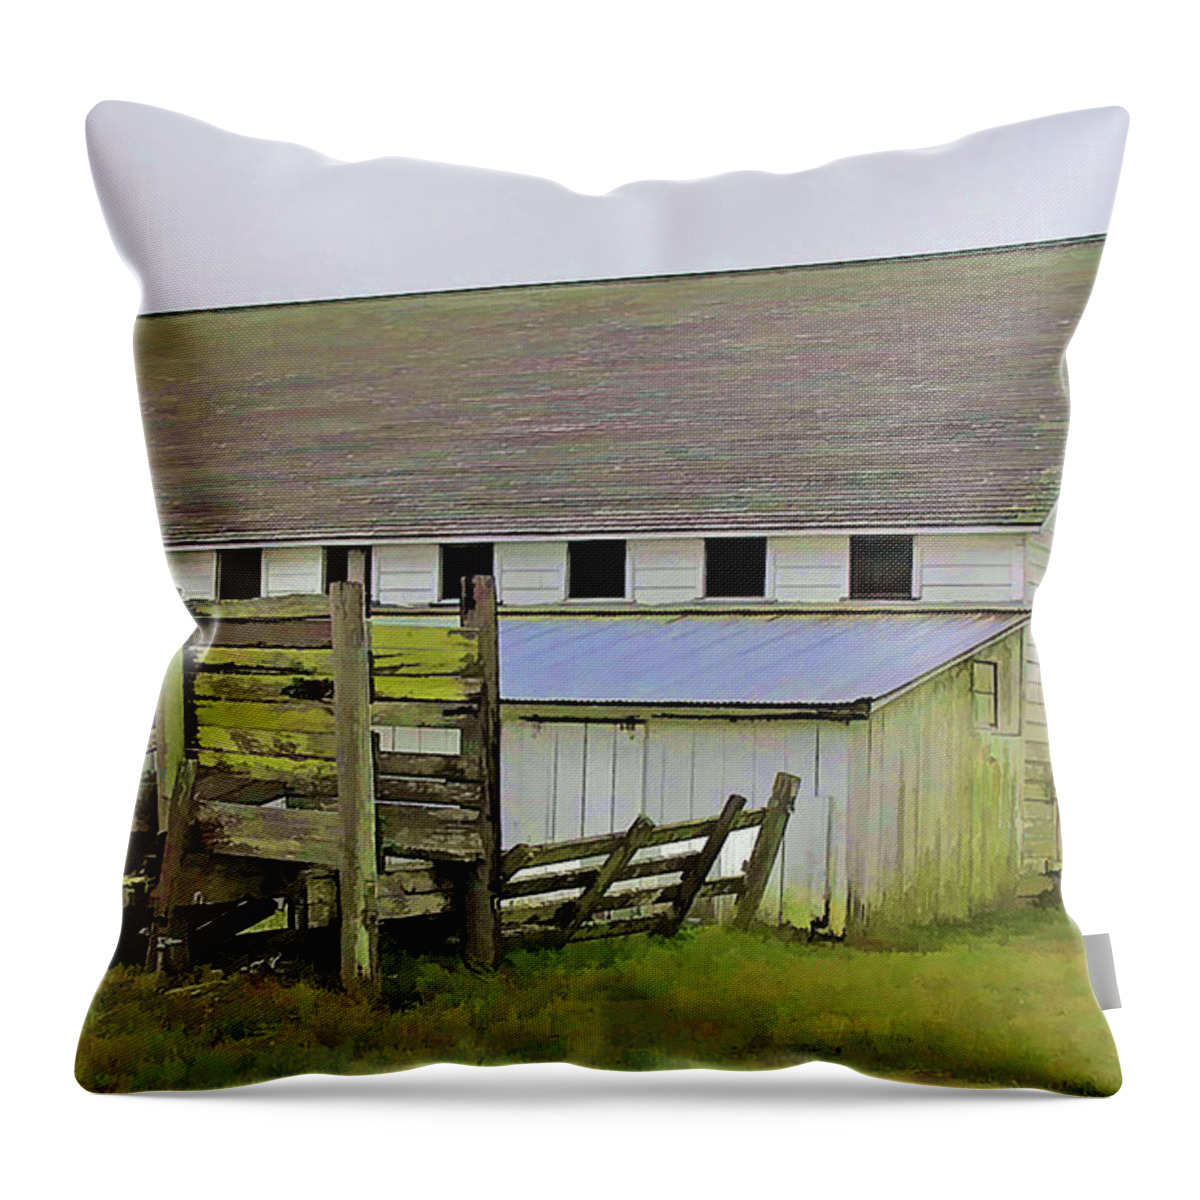 Barn Throw Pillow featuring the photograph Pierce Pt. Ranch Barn by Joyce Creswell